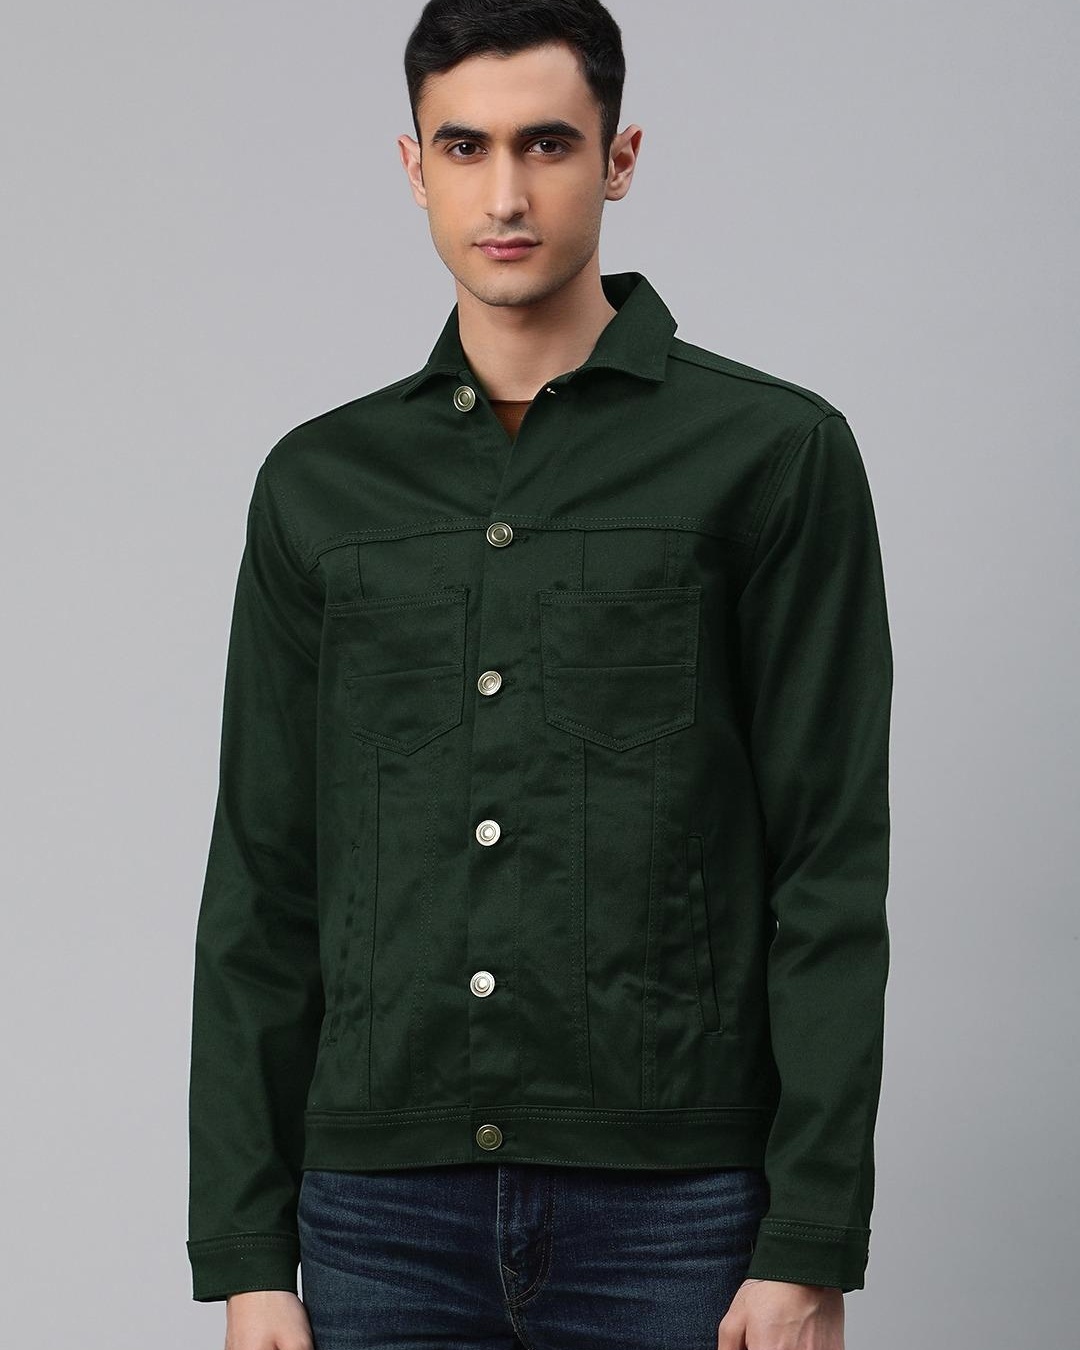 Buy Bewakoof Women Solid Green Full Sleeve Hooded Jacket at Amazon.in